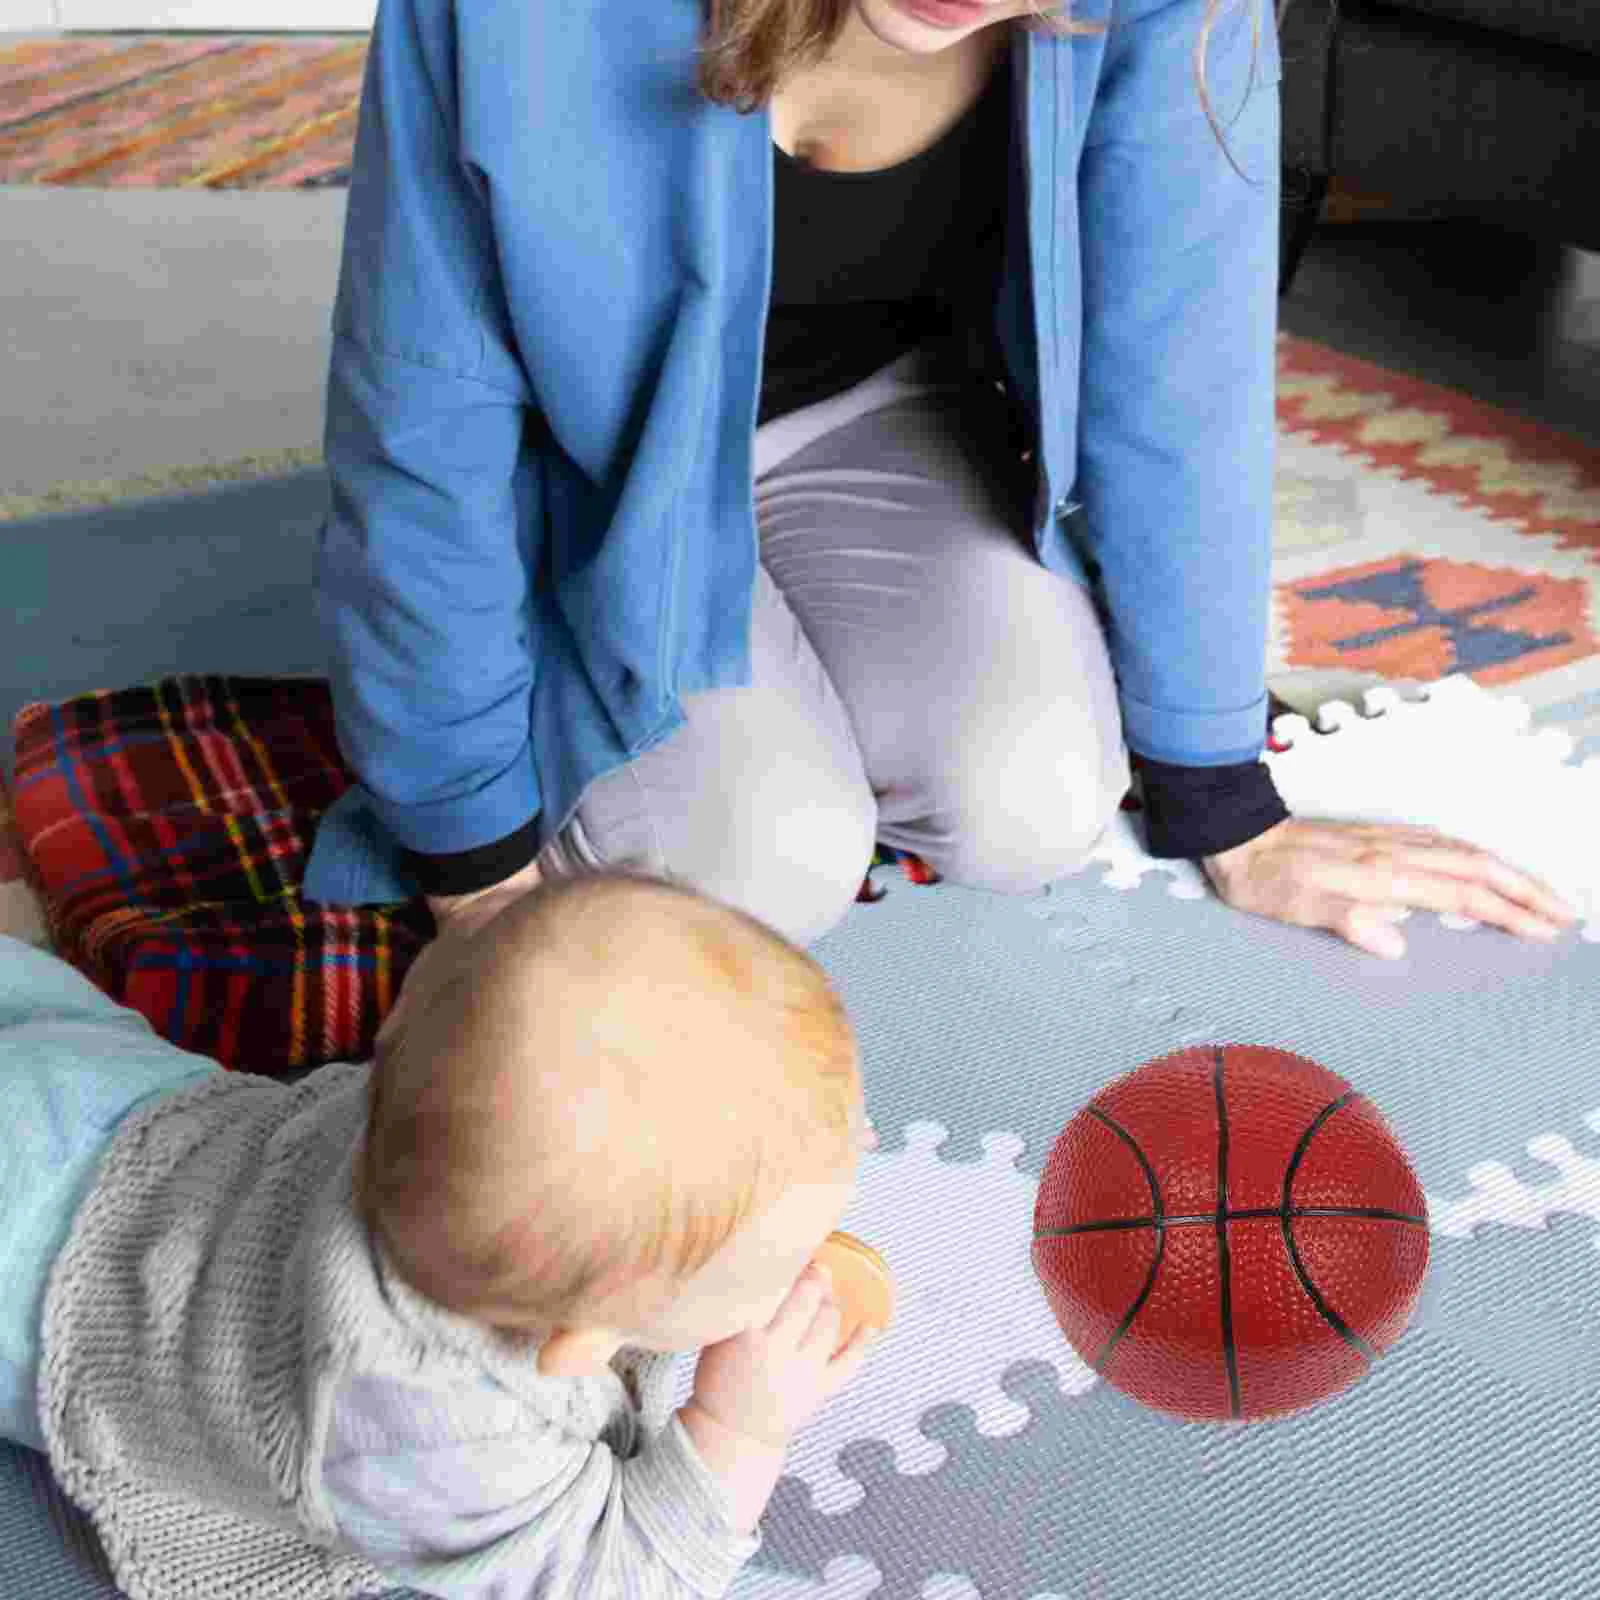 

1 шт. баскетбол, Баскетбол для малышей, красочный детский баскетбольный резиновый баскетбольный мяч для детей, баскетбольные мячи для подростков ()